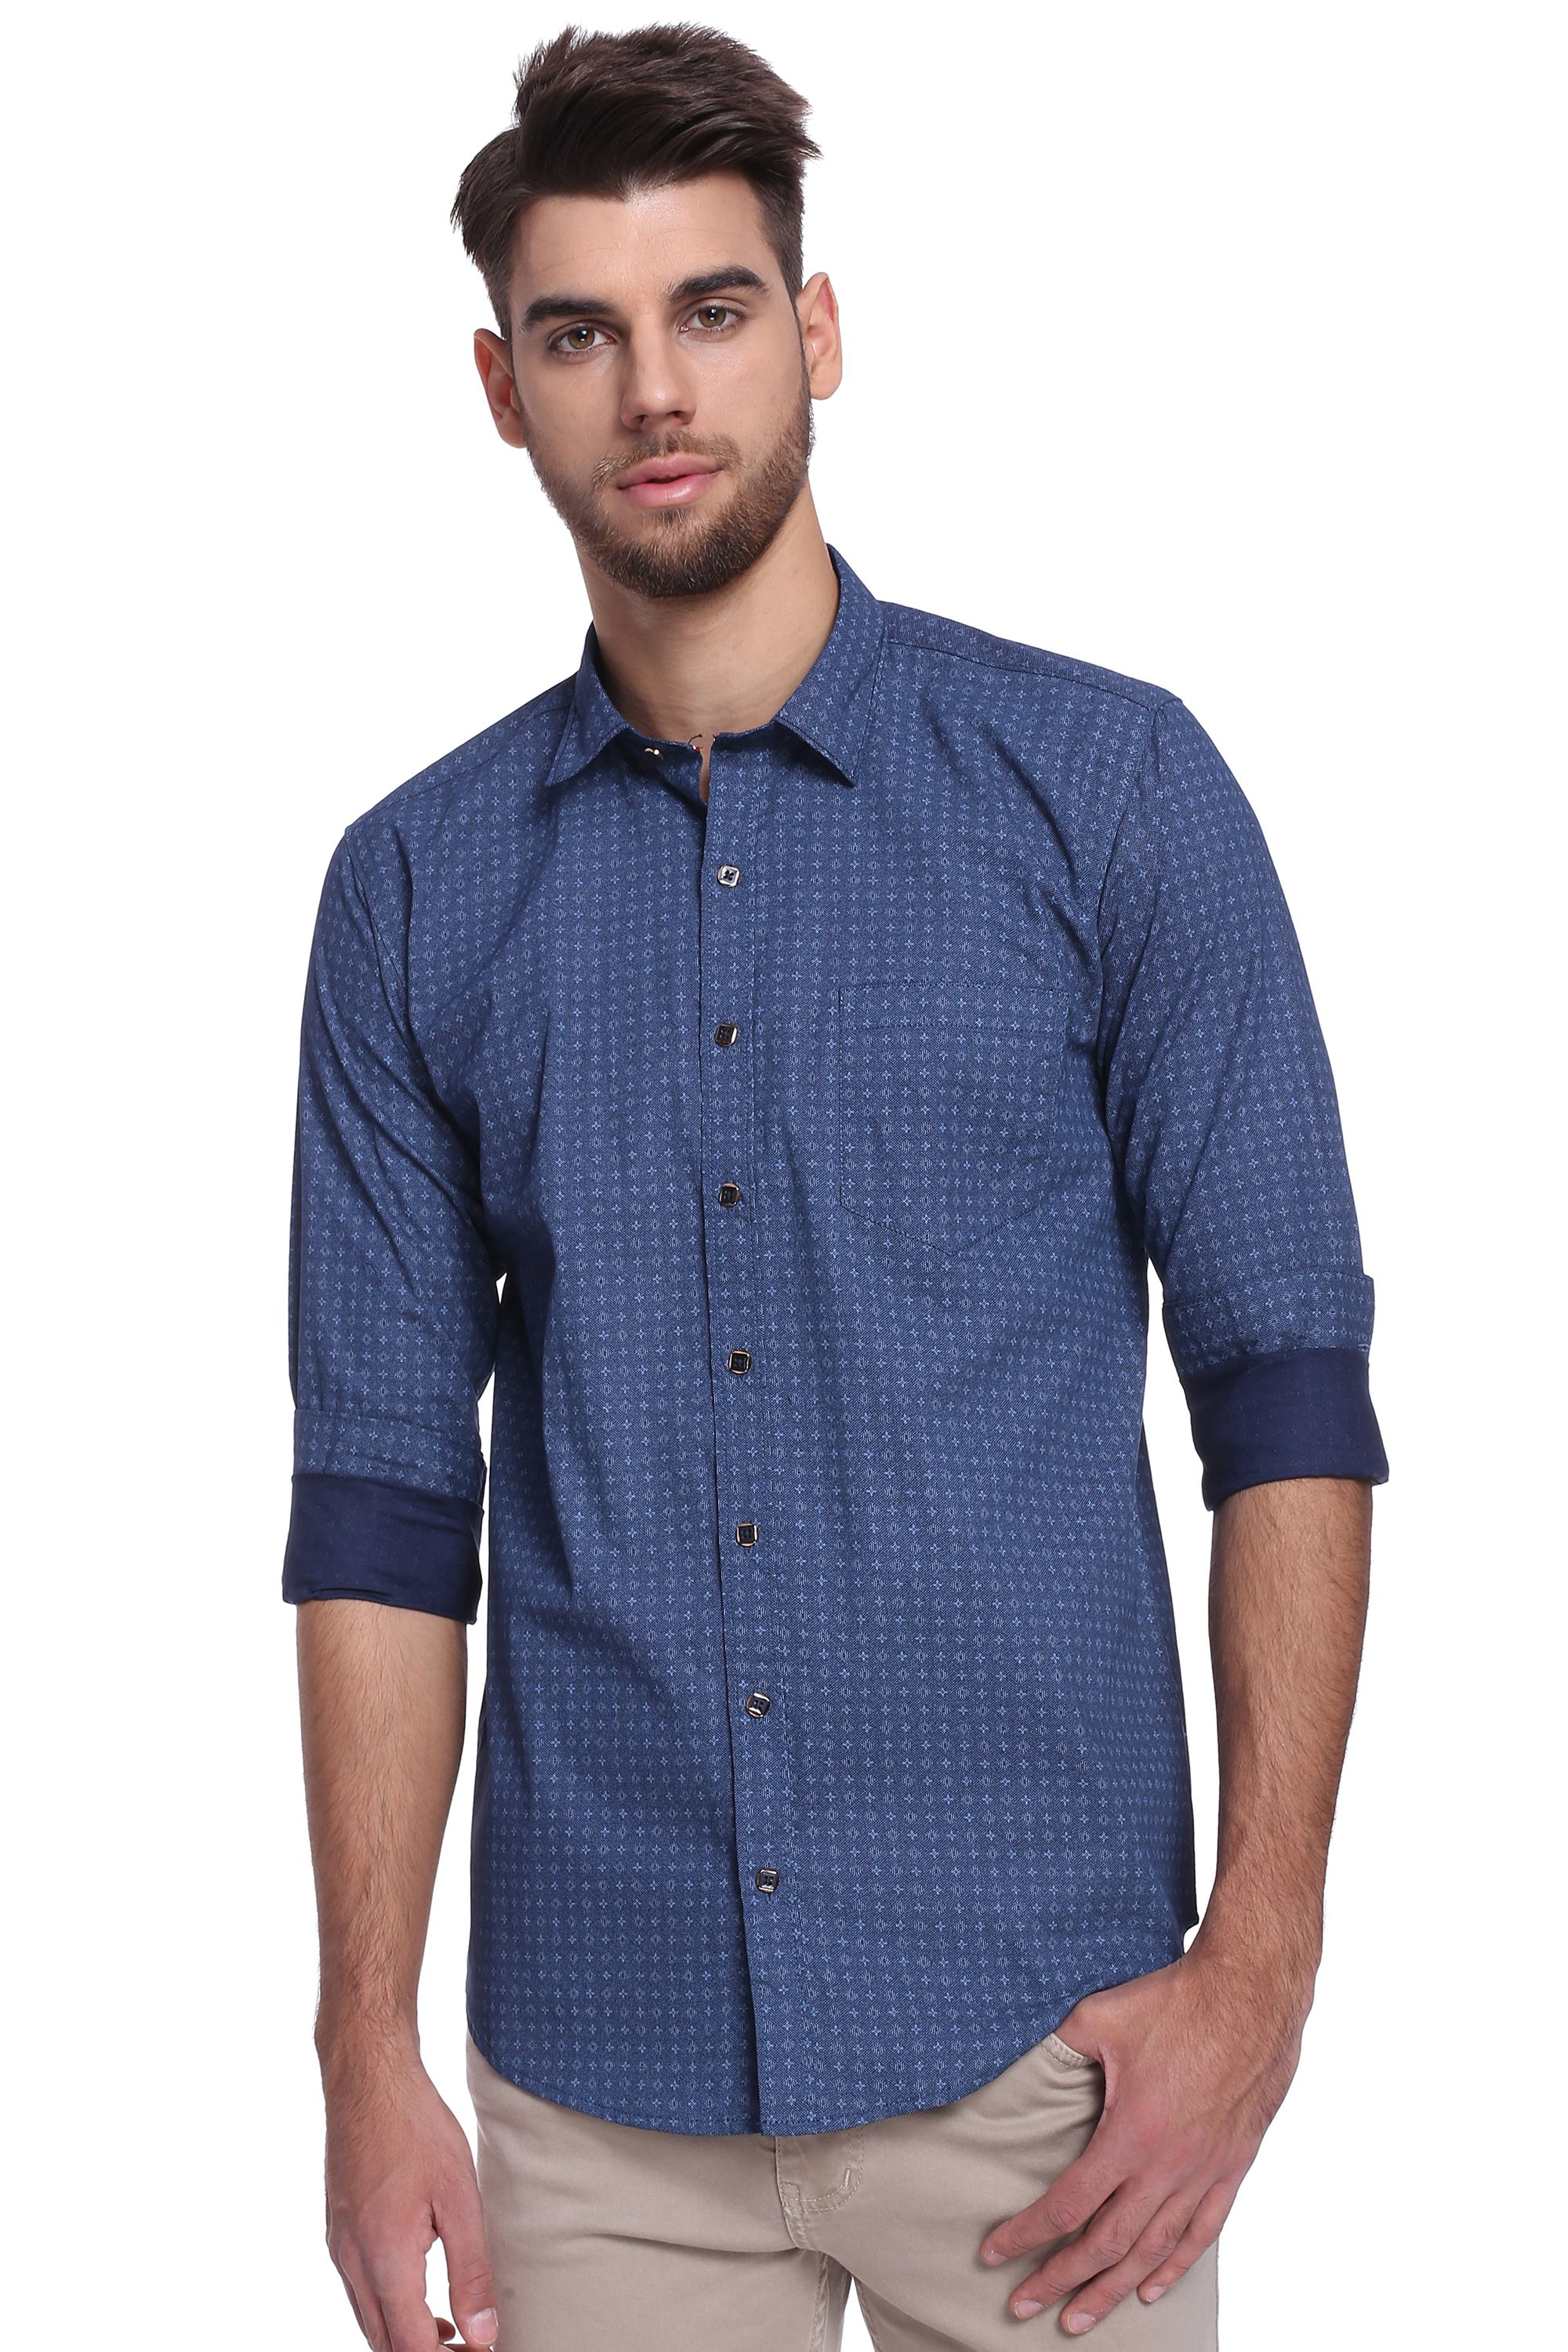 Moraya Collections Blue Slim Fit Shirt - Buy Moraya Collections Blue ...